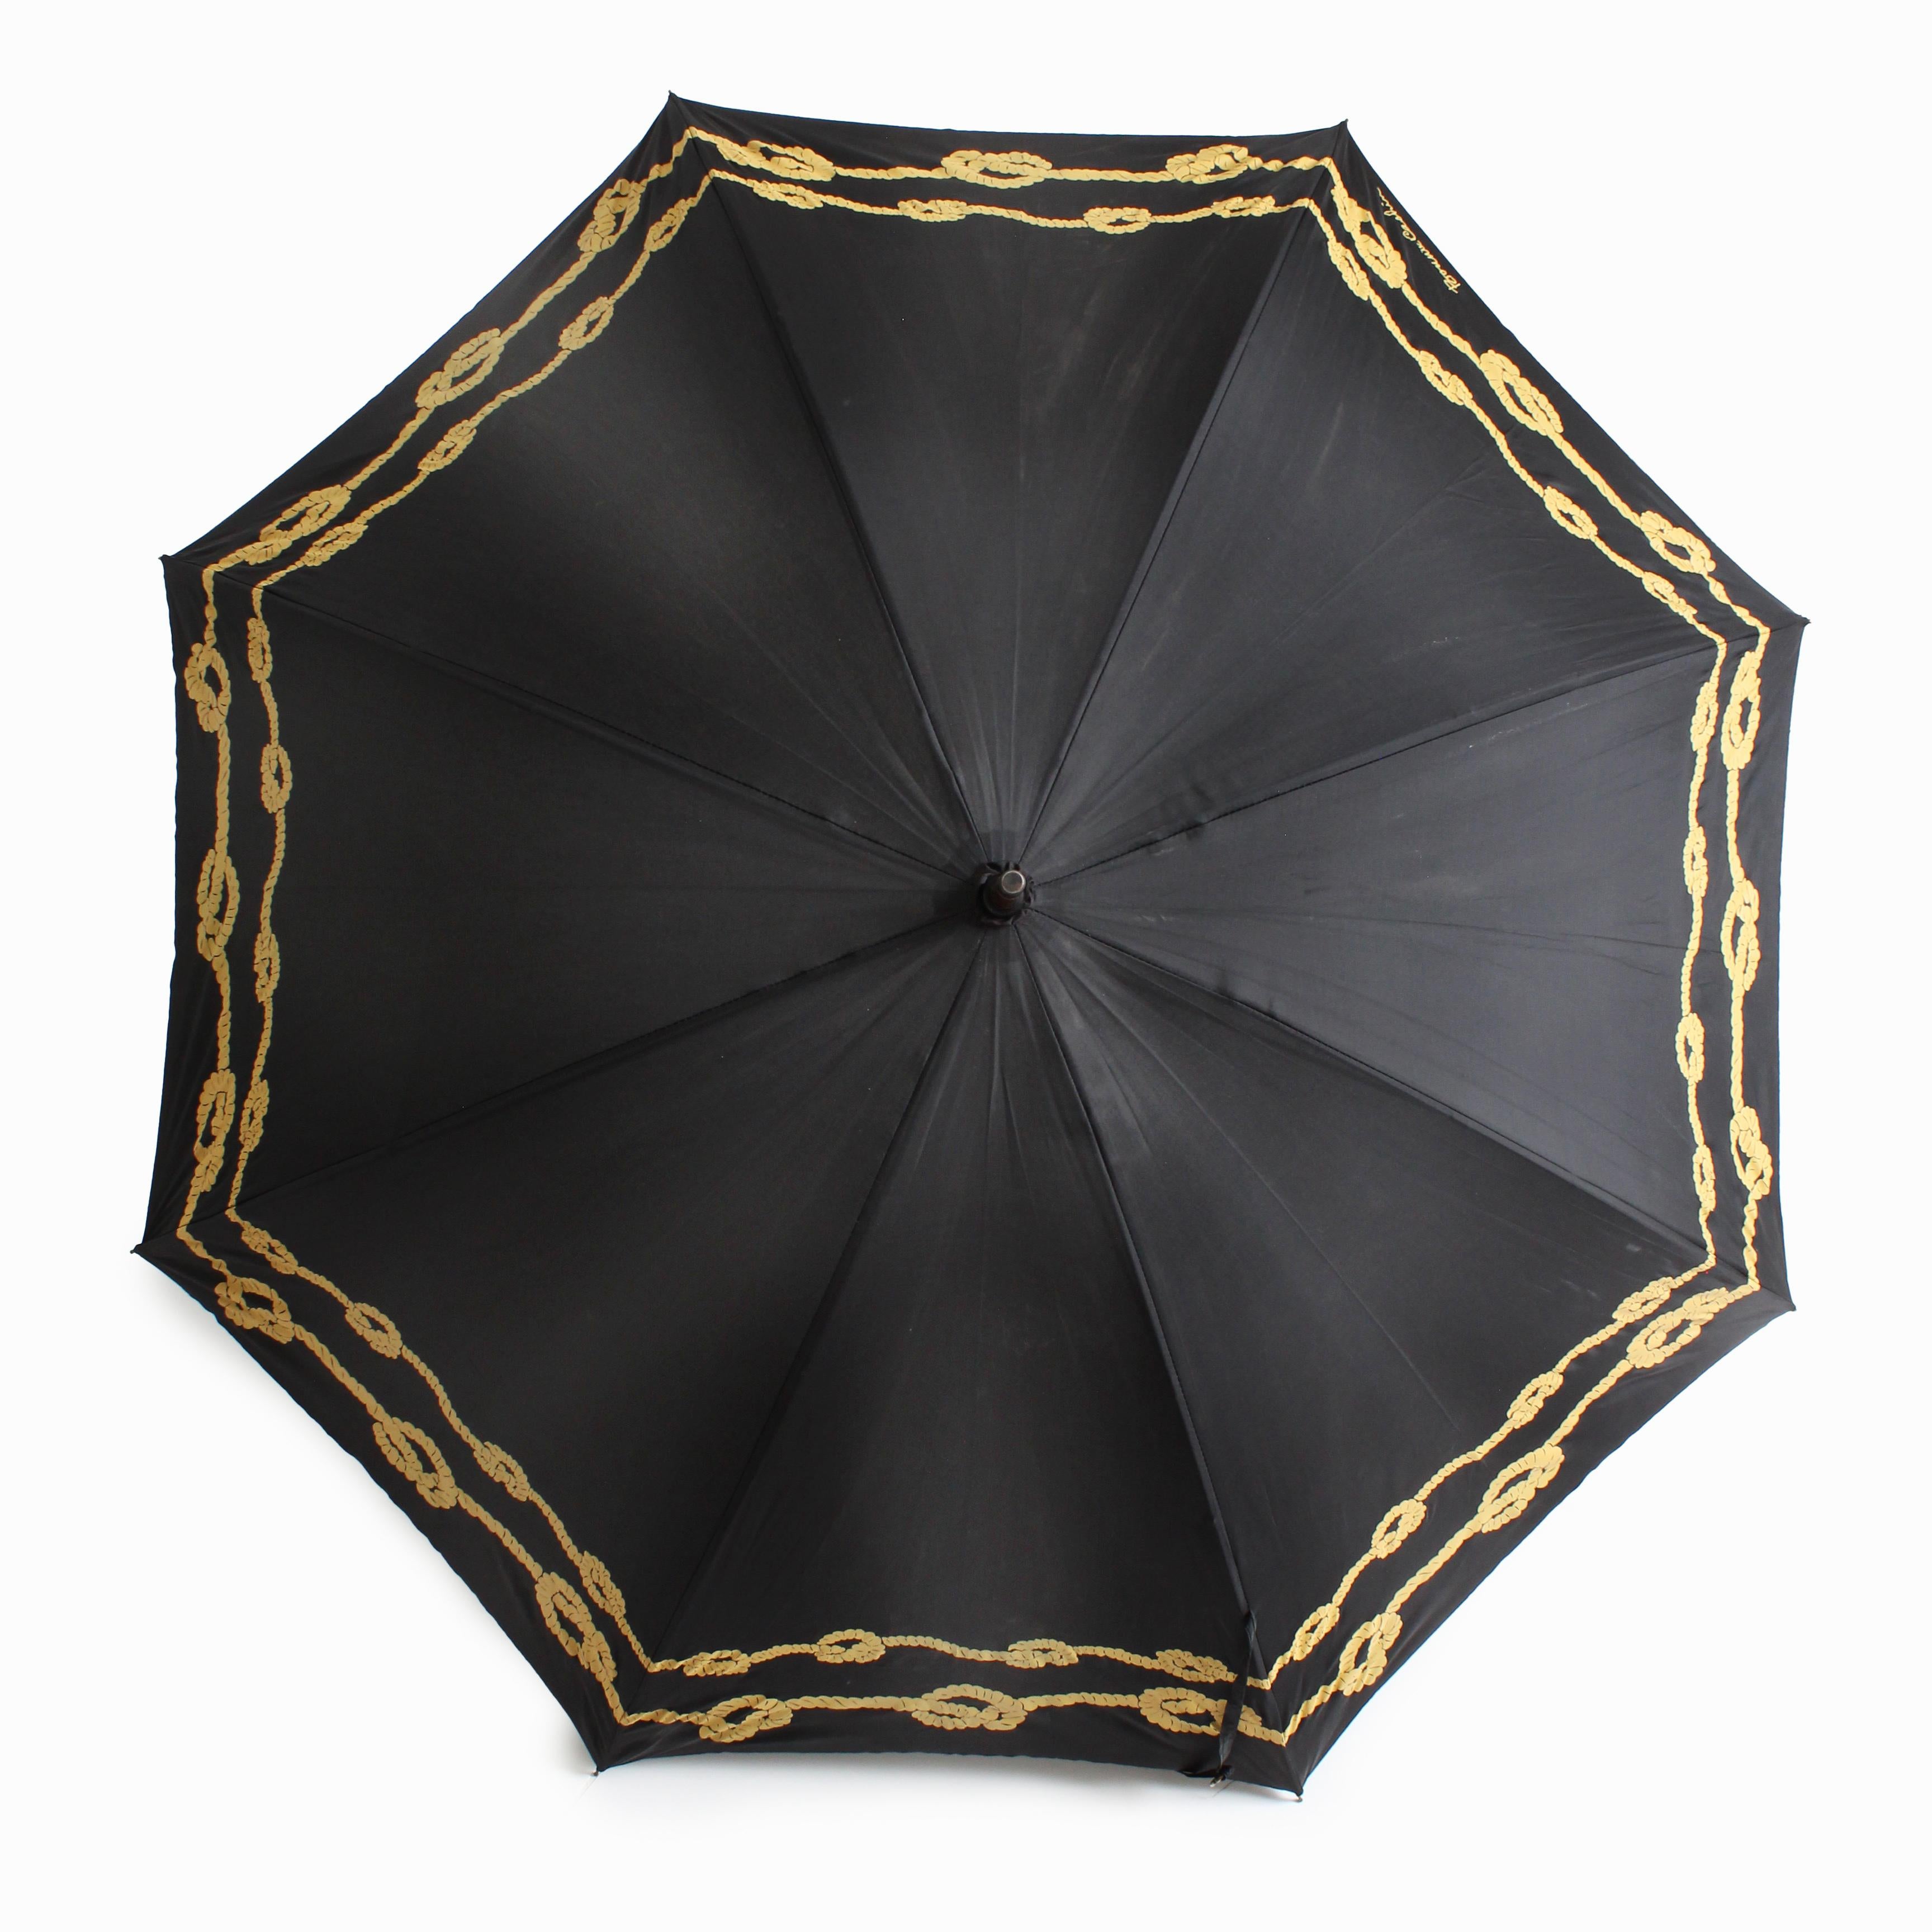 Bonnie Cashin Umbrella Black Gold Rope Print for D.Klein New York RARE Vintage For Sale 2